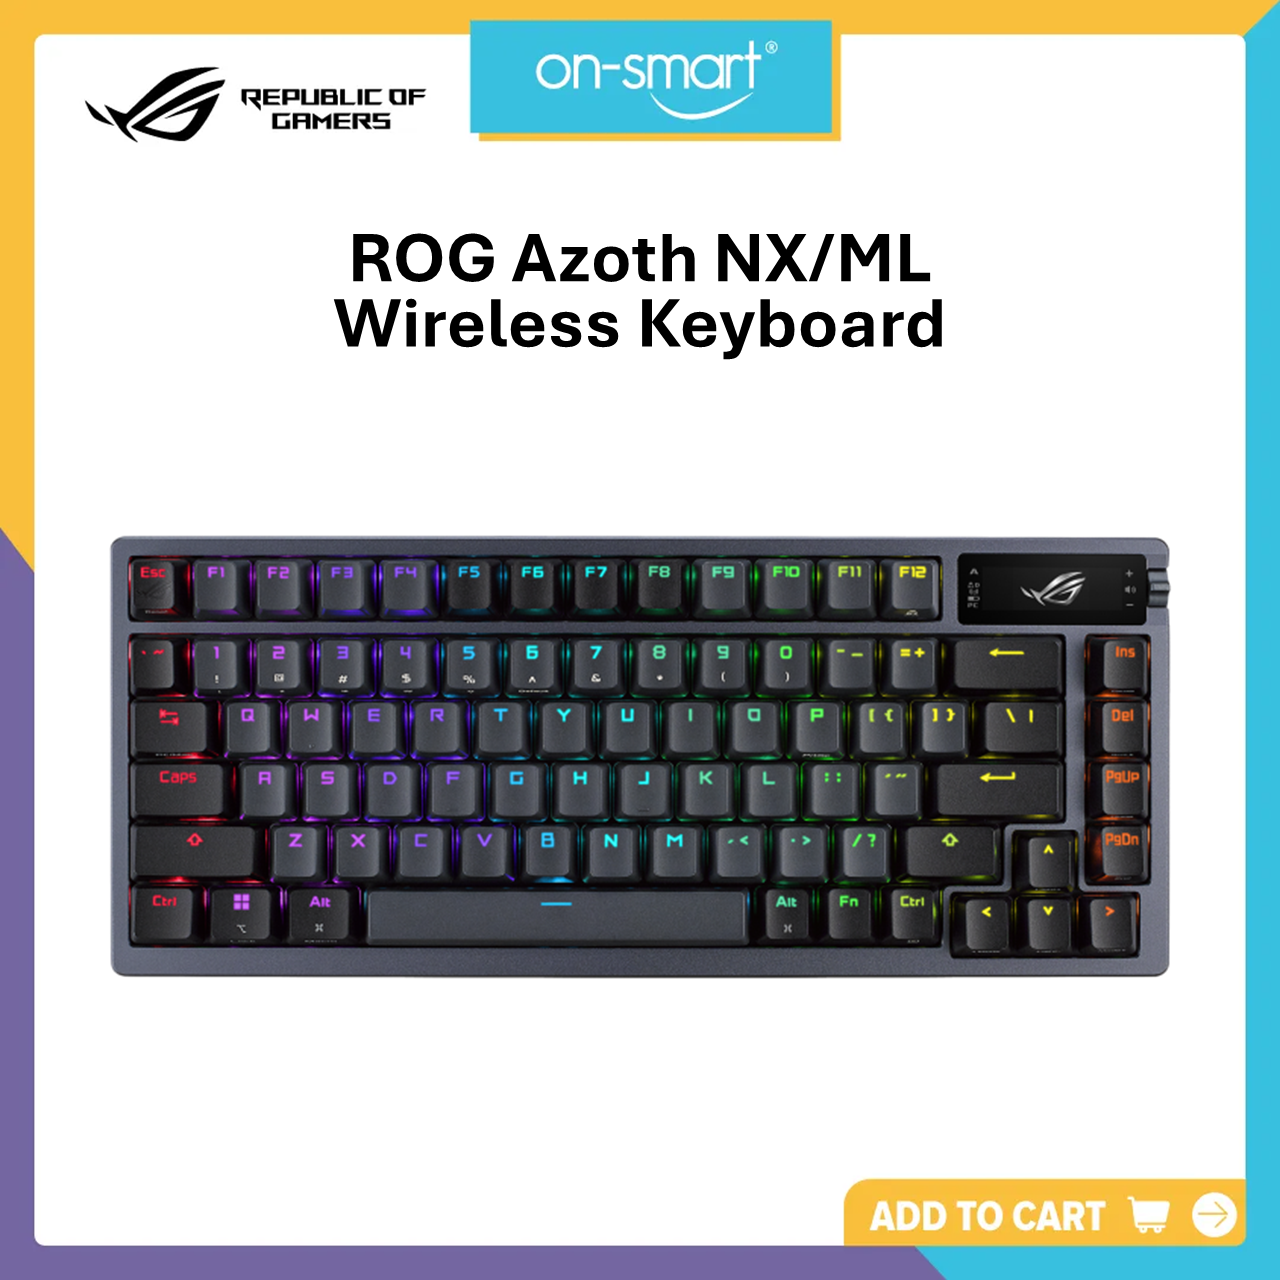 ASUS M701 ROG Azoth NX/SM Wireless Mechanical Gaming Keyboard